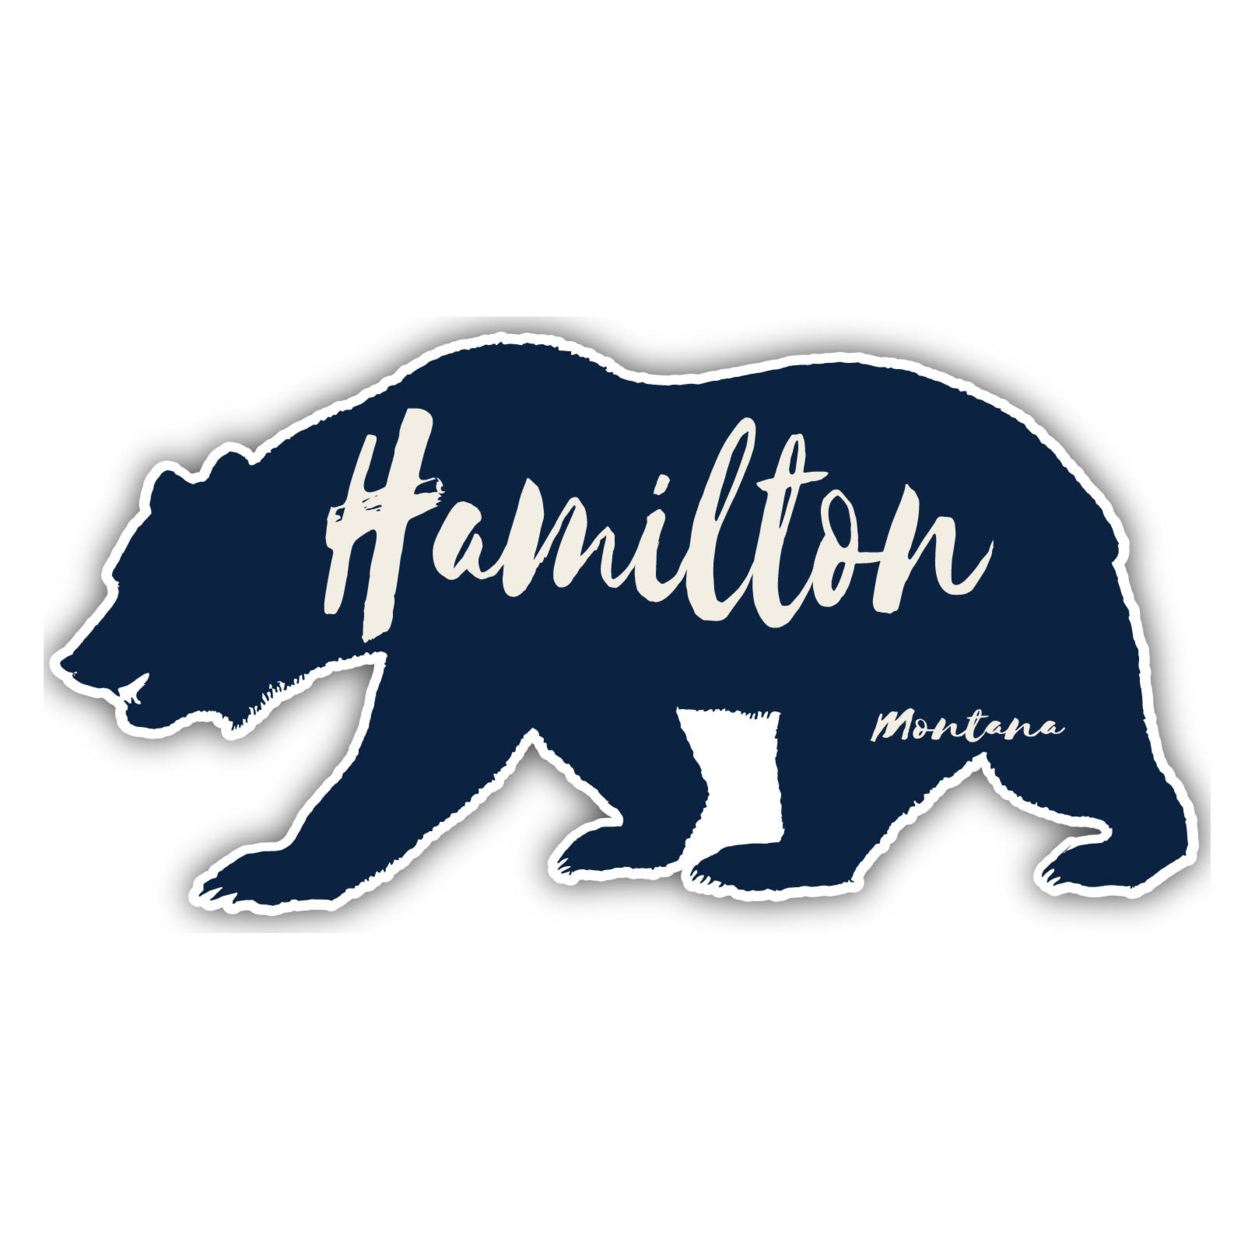 Hamilton Montana Souvenir Decorative Stickers (Choose Theme And Size) - 4-Pack, 4-Inch, Bear